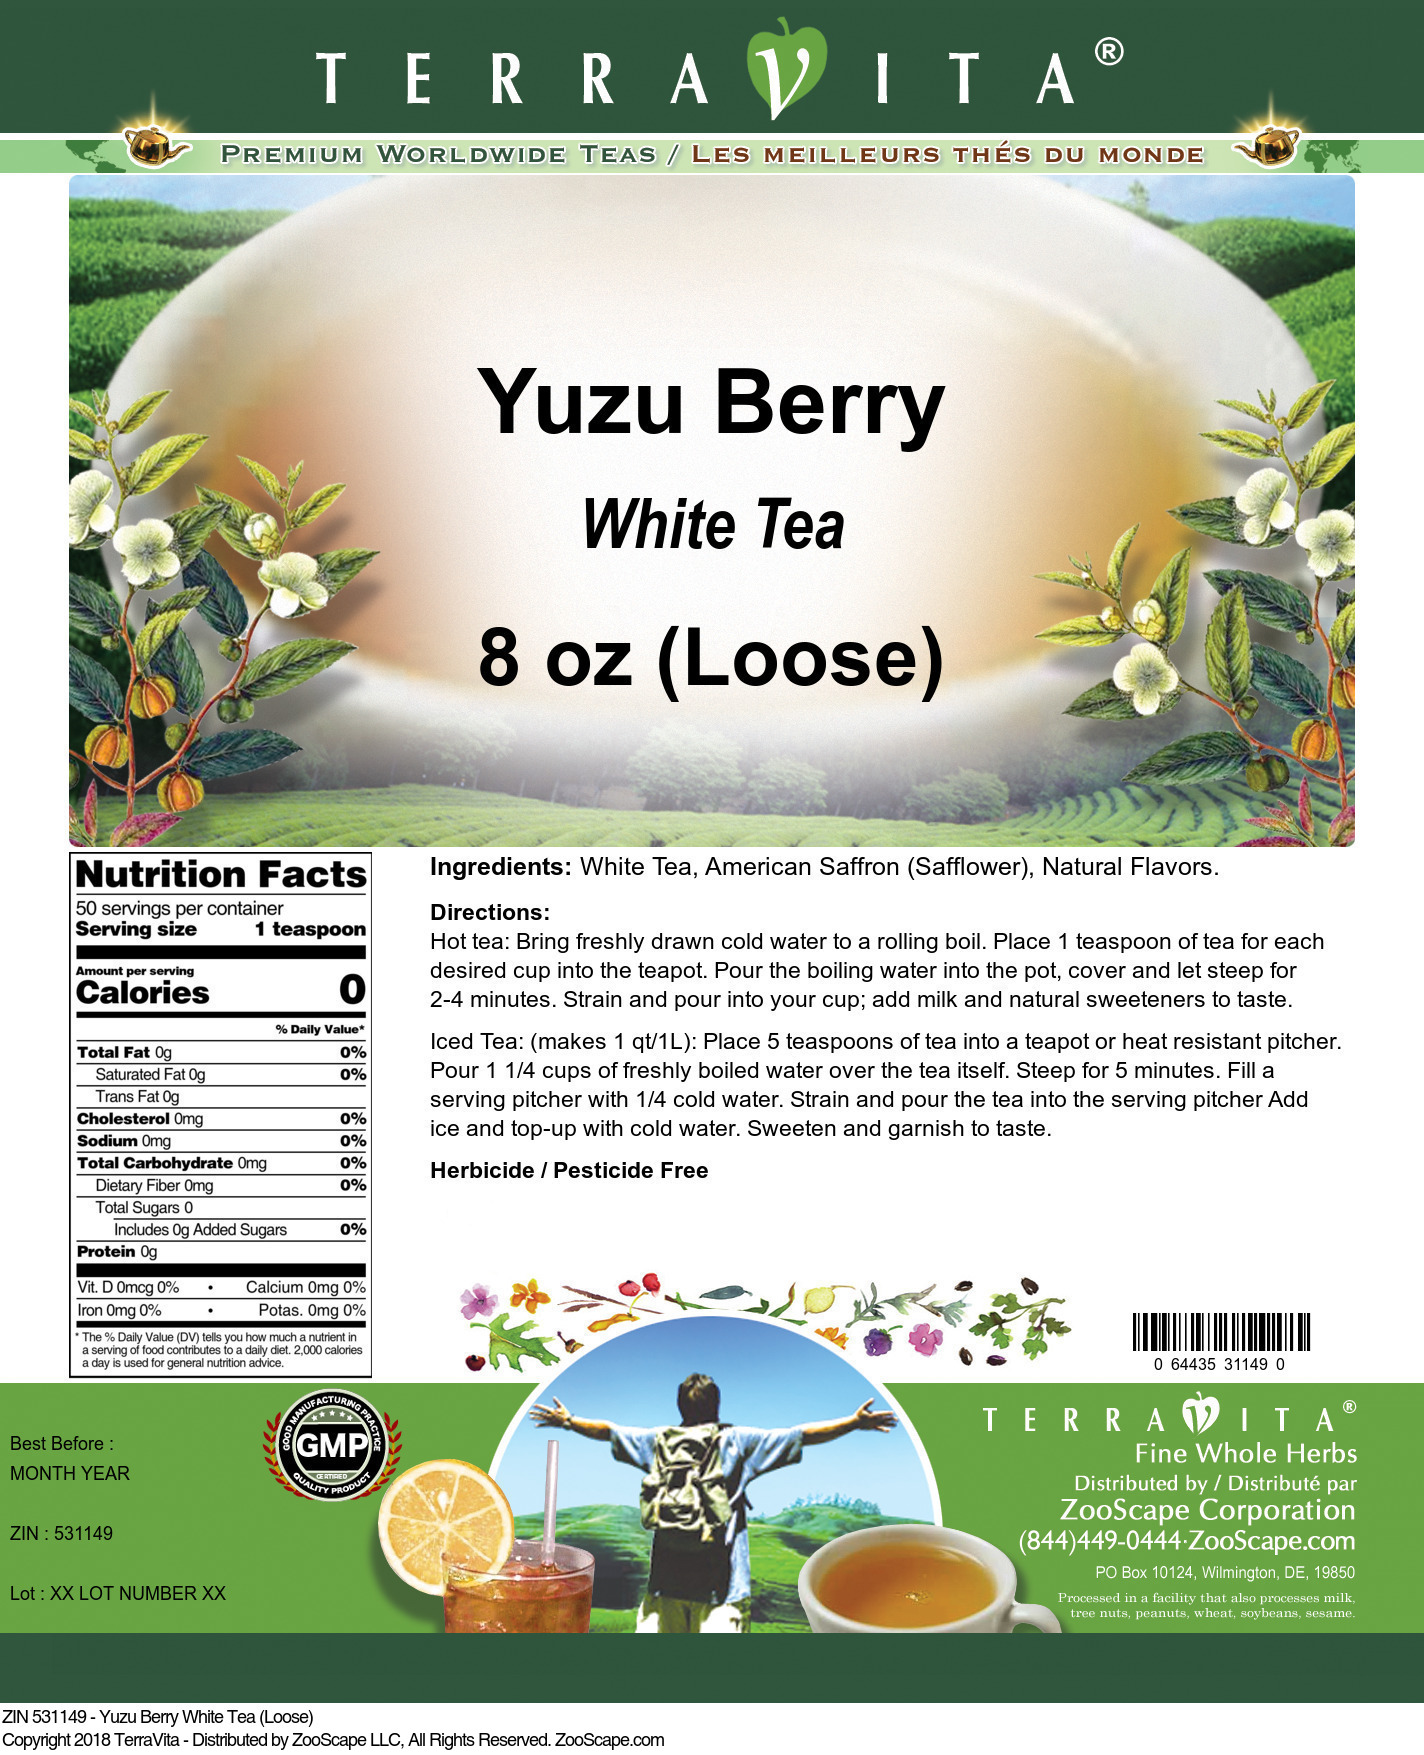 Yuzu Berry White Tea (Loose) - Label